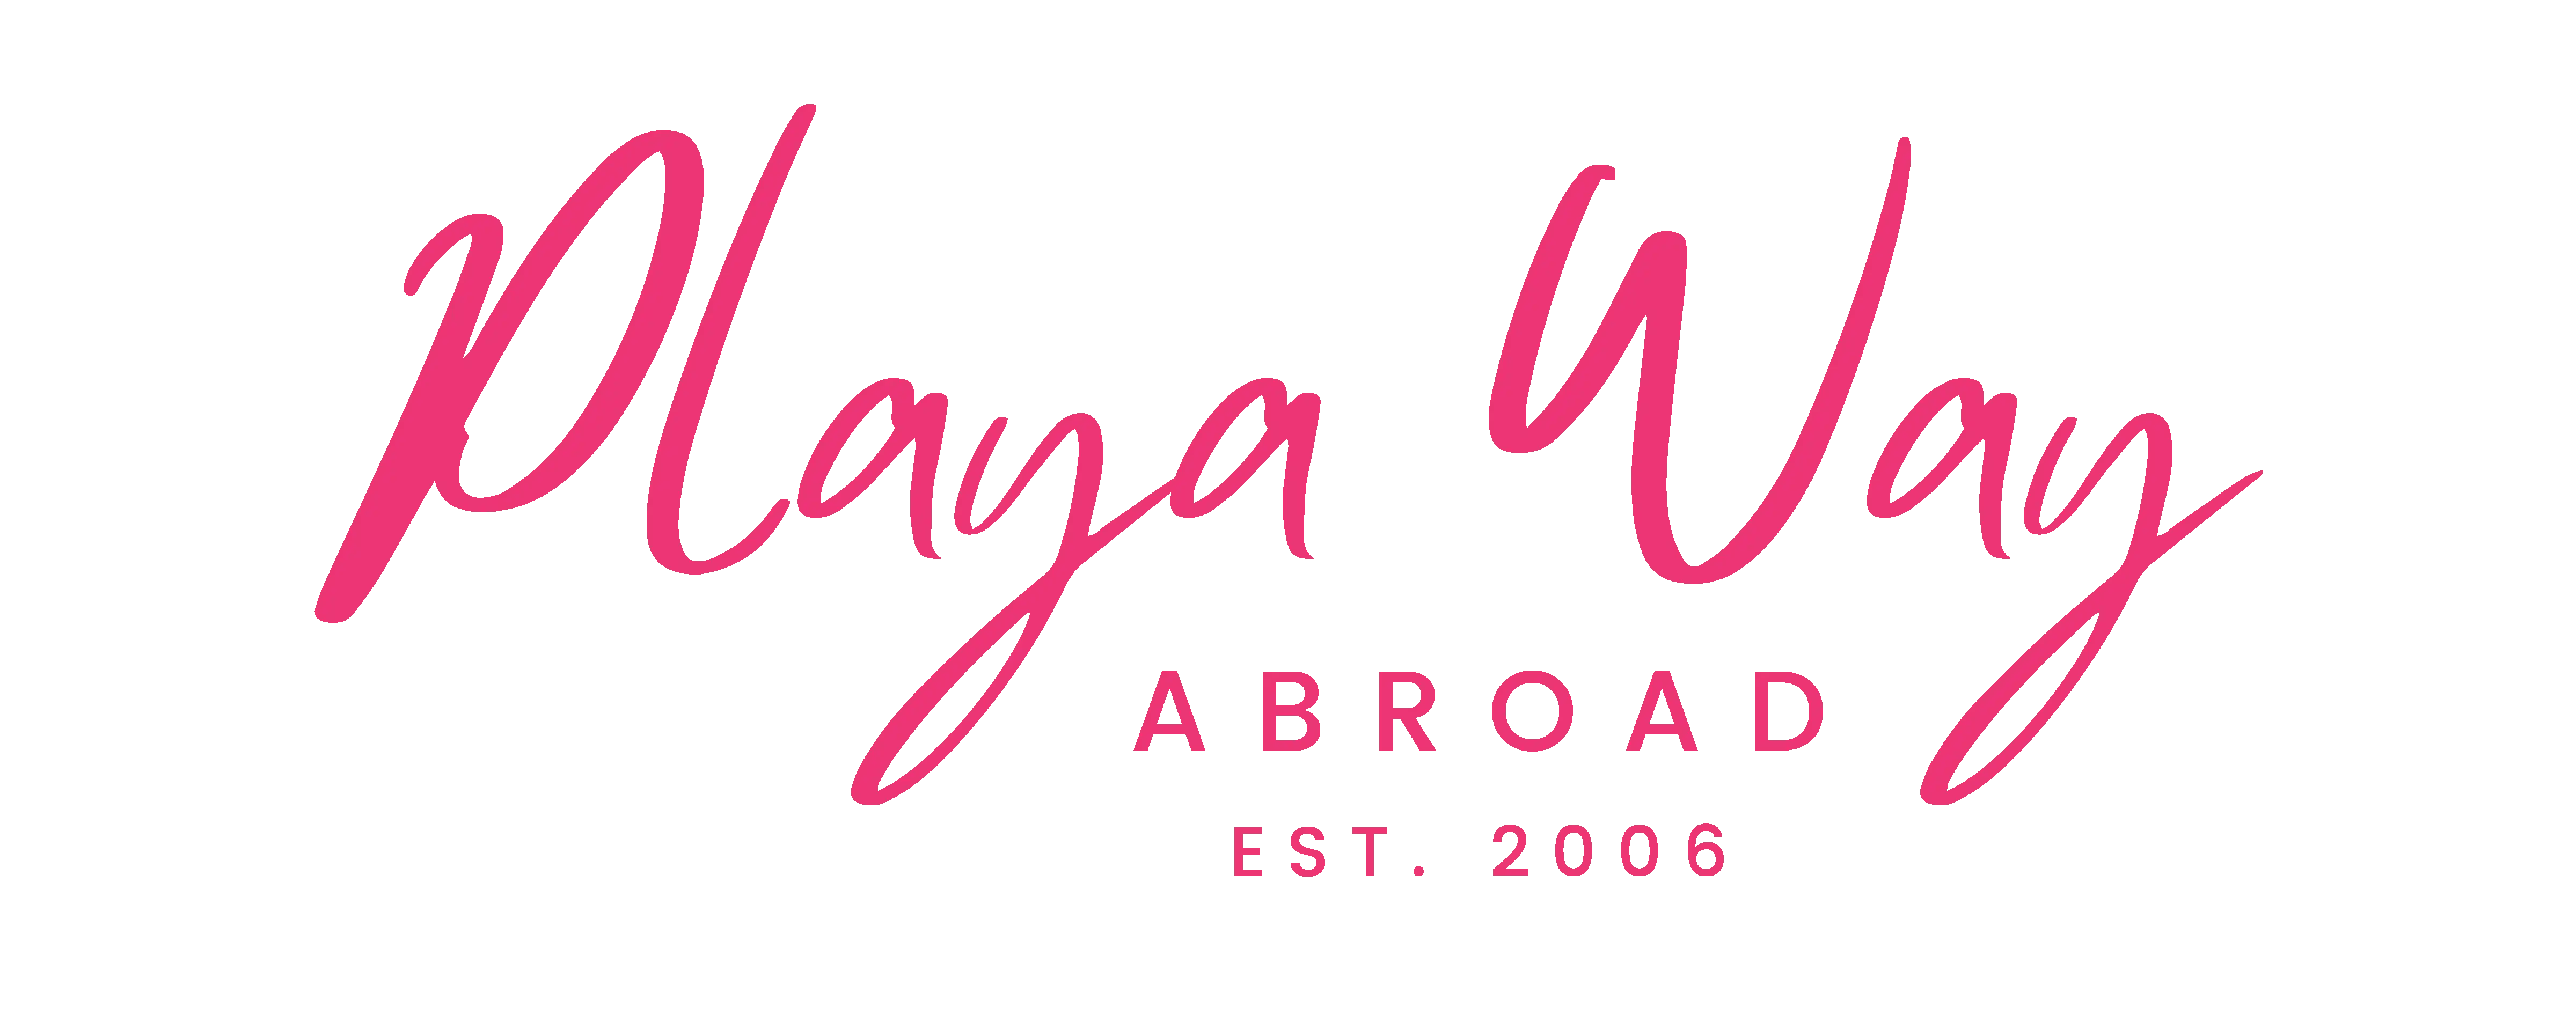 PlayaWay Abroad